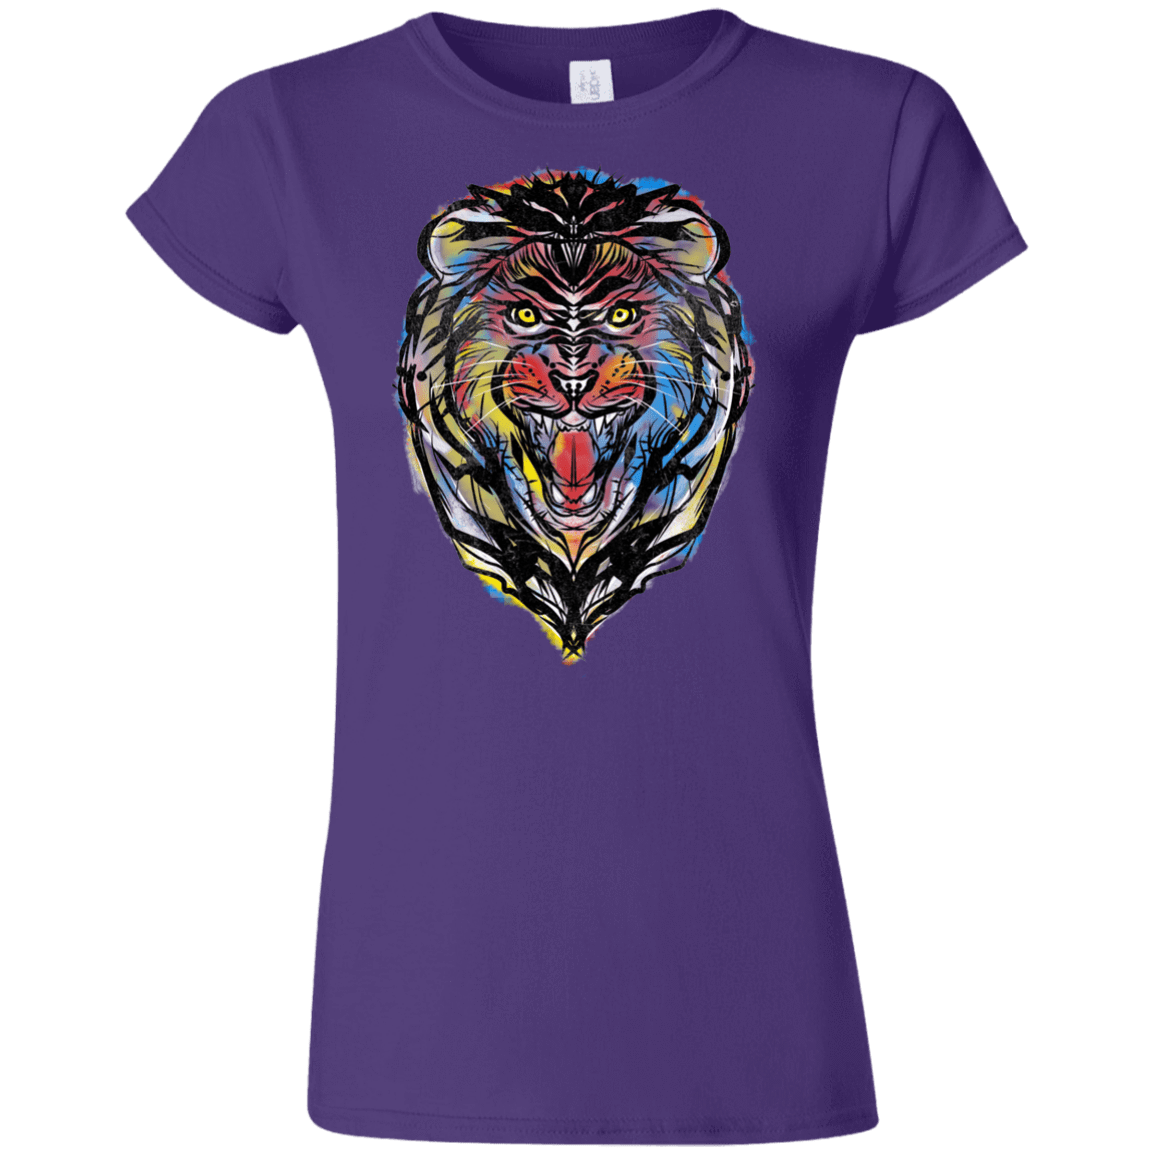 T-Shirts Purple / S Stencil Lion Junior Slimmer-Fit T-Shirt